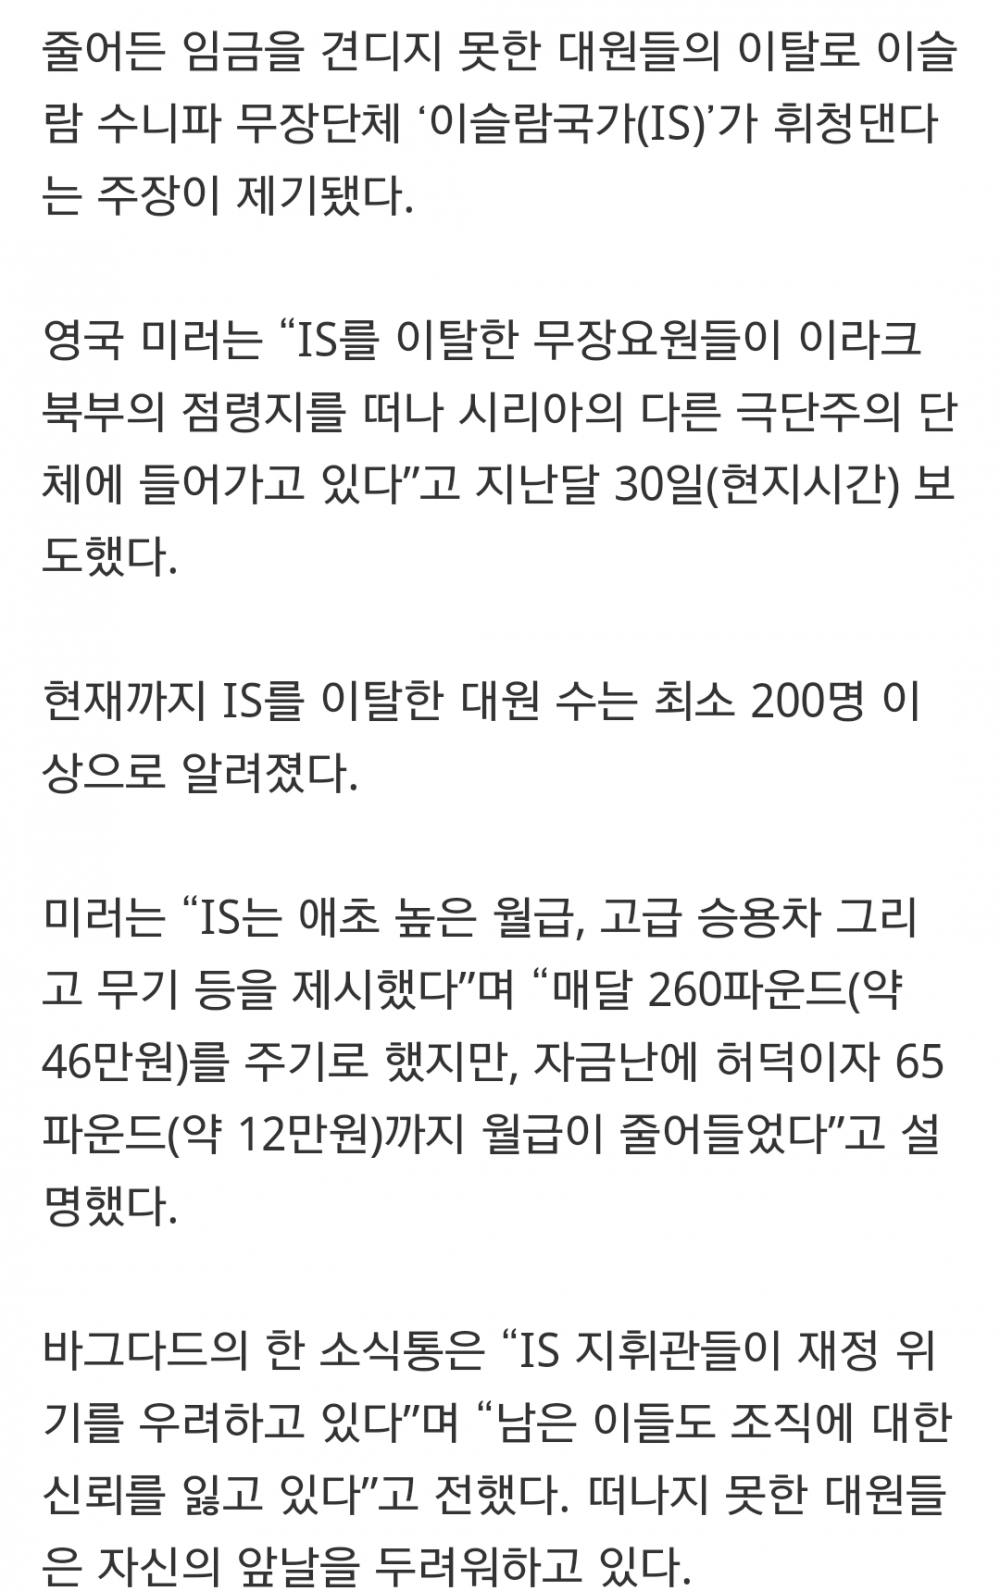 Daum_Screenshot_2015-10-01_18-20-38.png : Is, 적은 임금에 이탈하는 사람 증가 ㅋㅋㅋ.NEWS